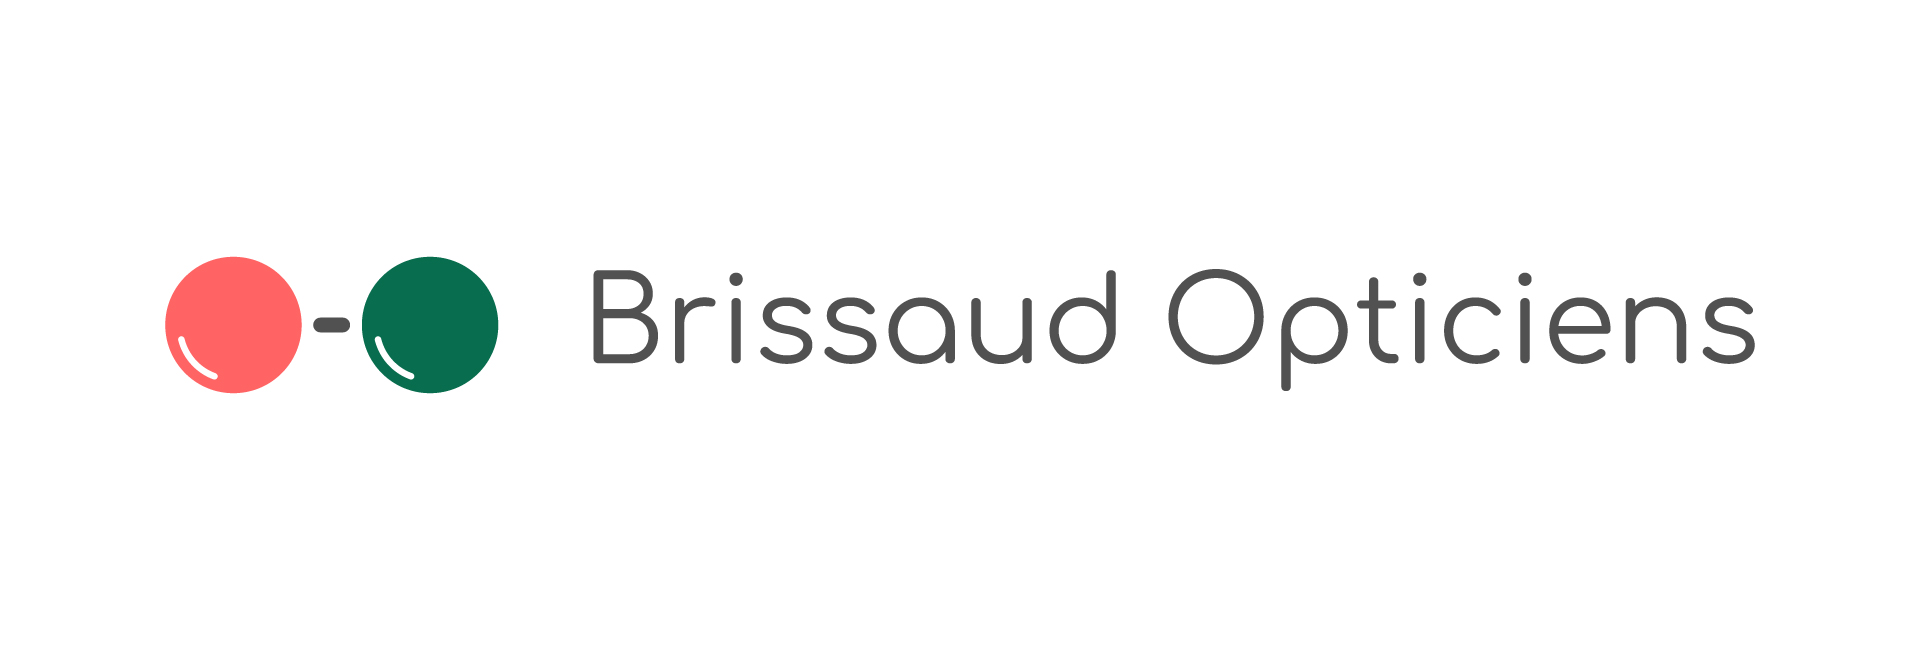 Logo-BRISSAUD-OPTICIENS_Simp-LARGE